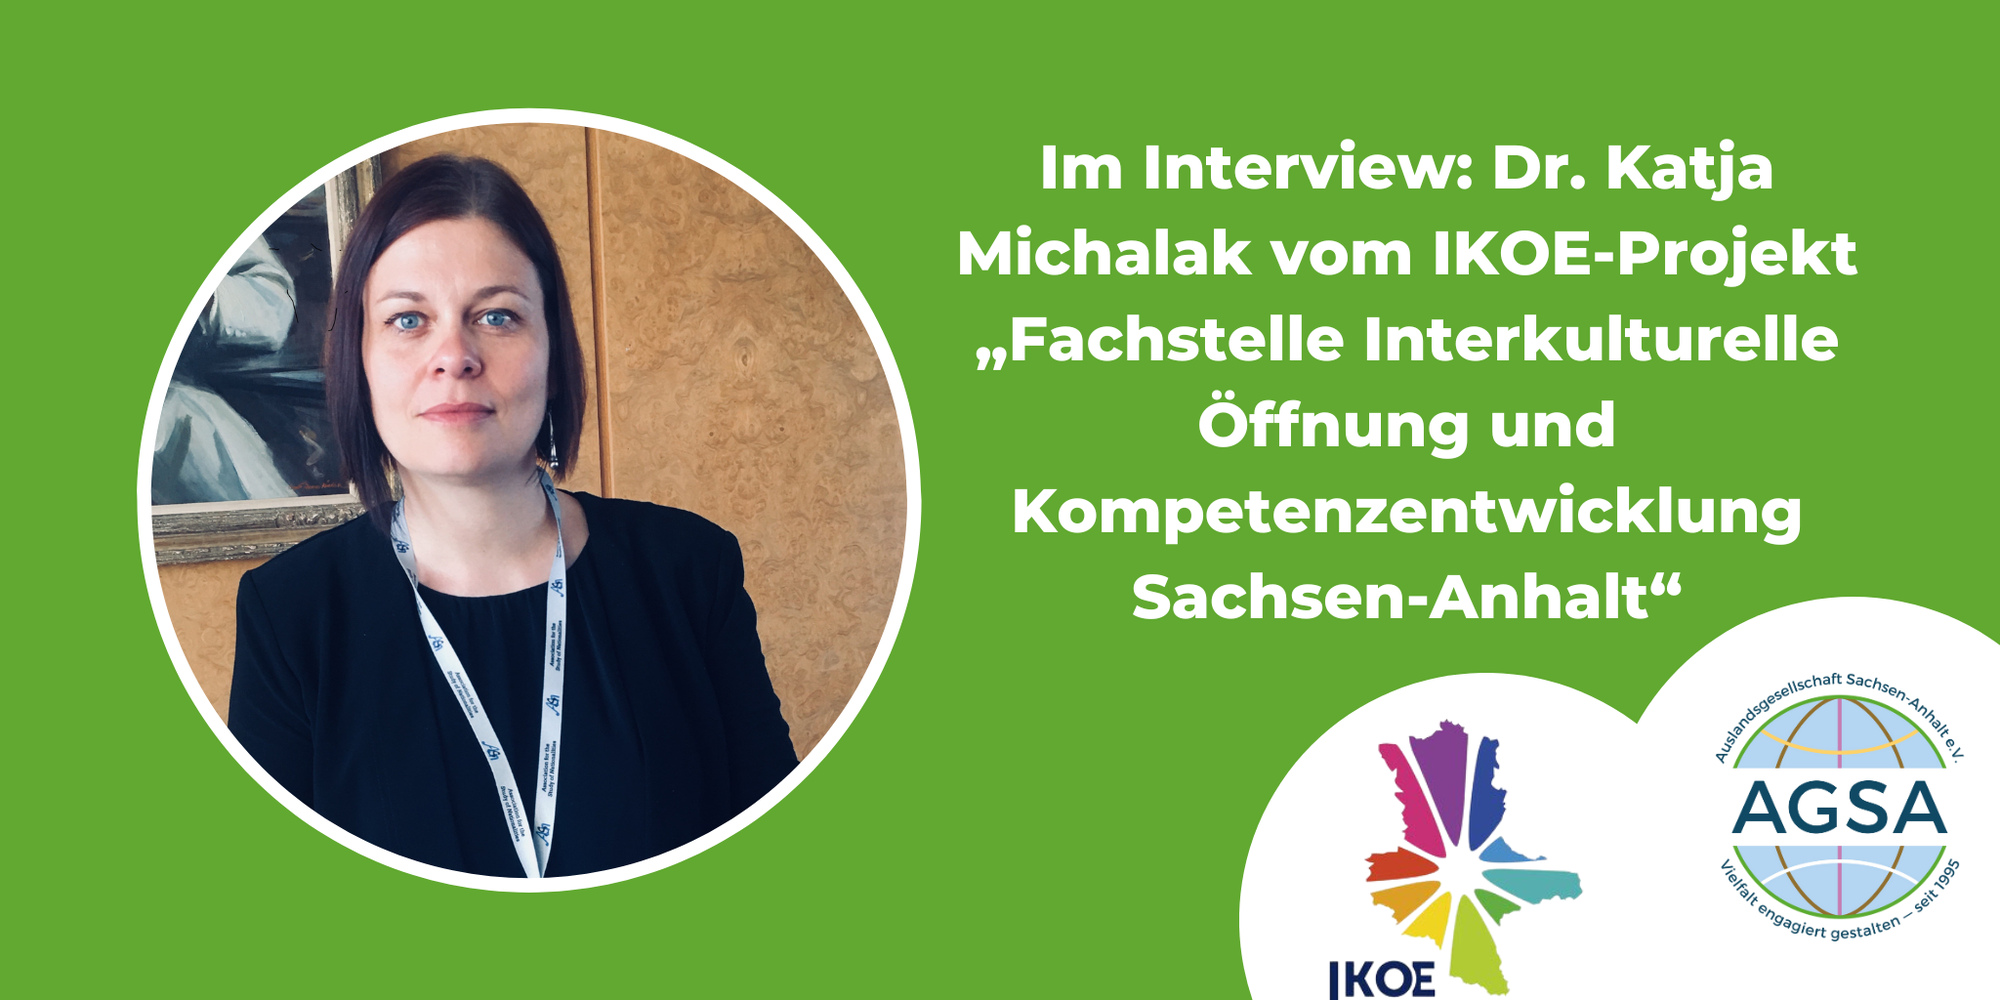 Im Interview: Dr. Katja Michalak vom IKOE-Projekt